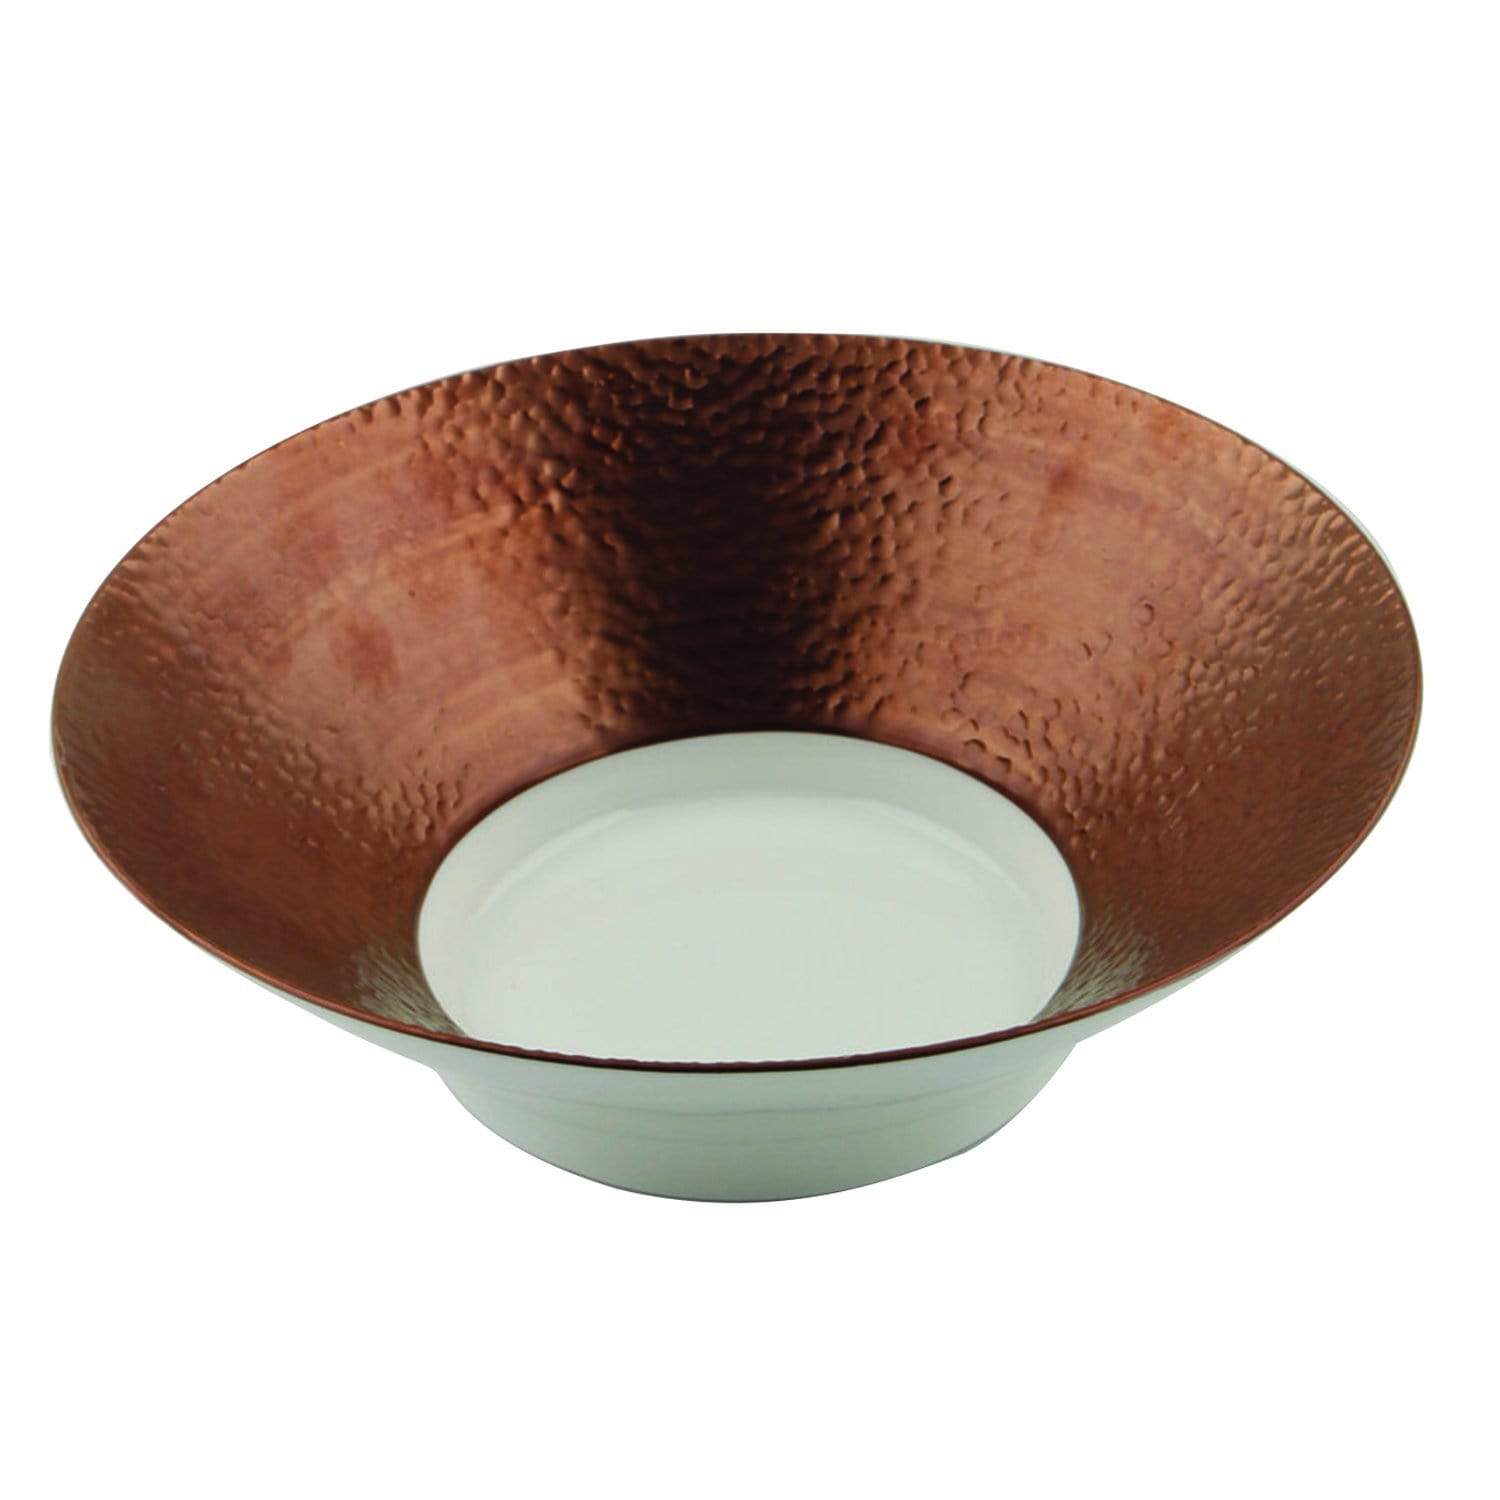 Porland Porselen Legacy Copper Bowl - 21 cm - 04ALM004349 - Jashanmal Home